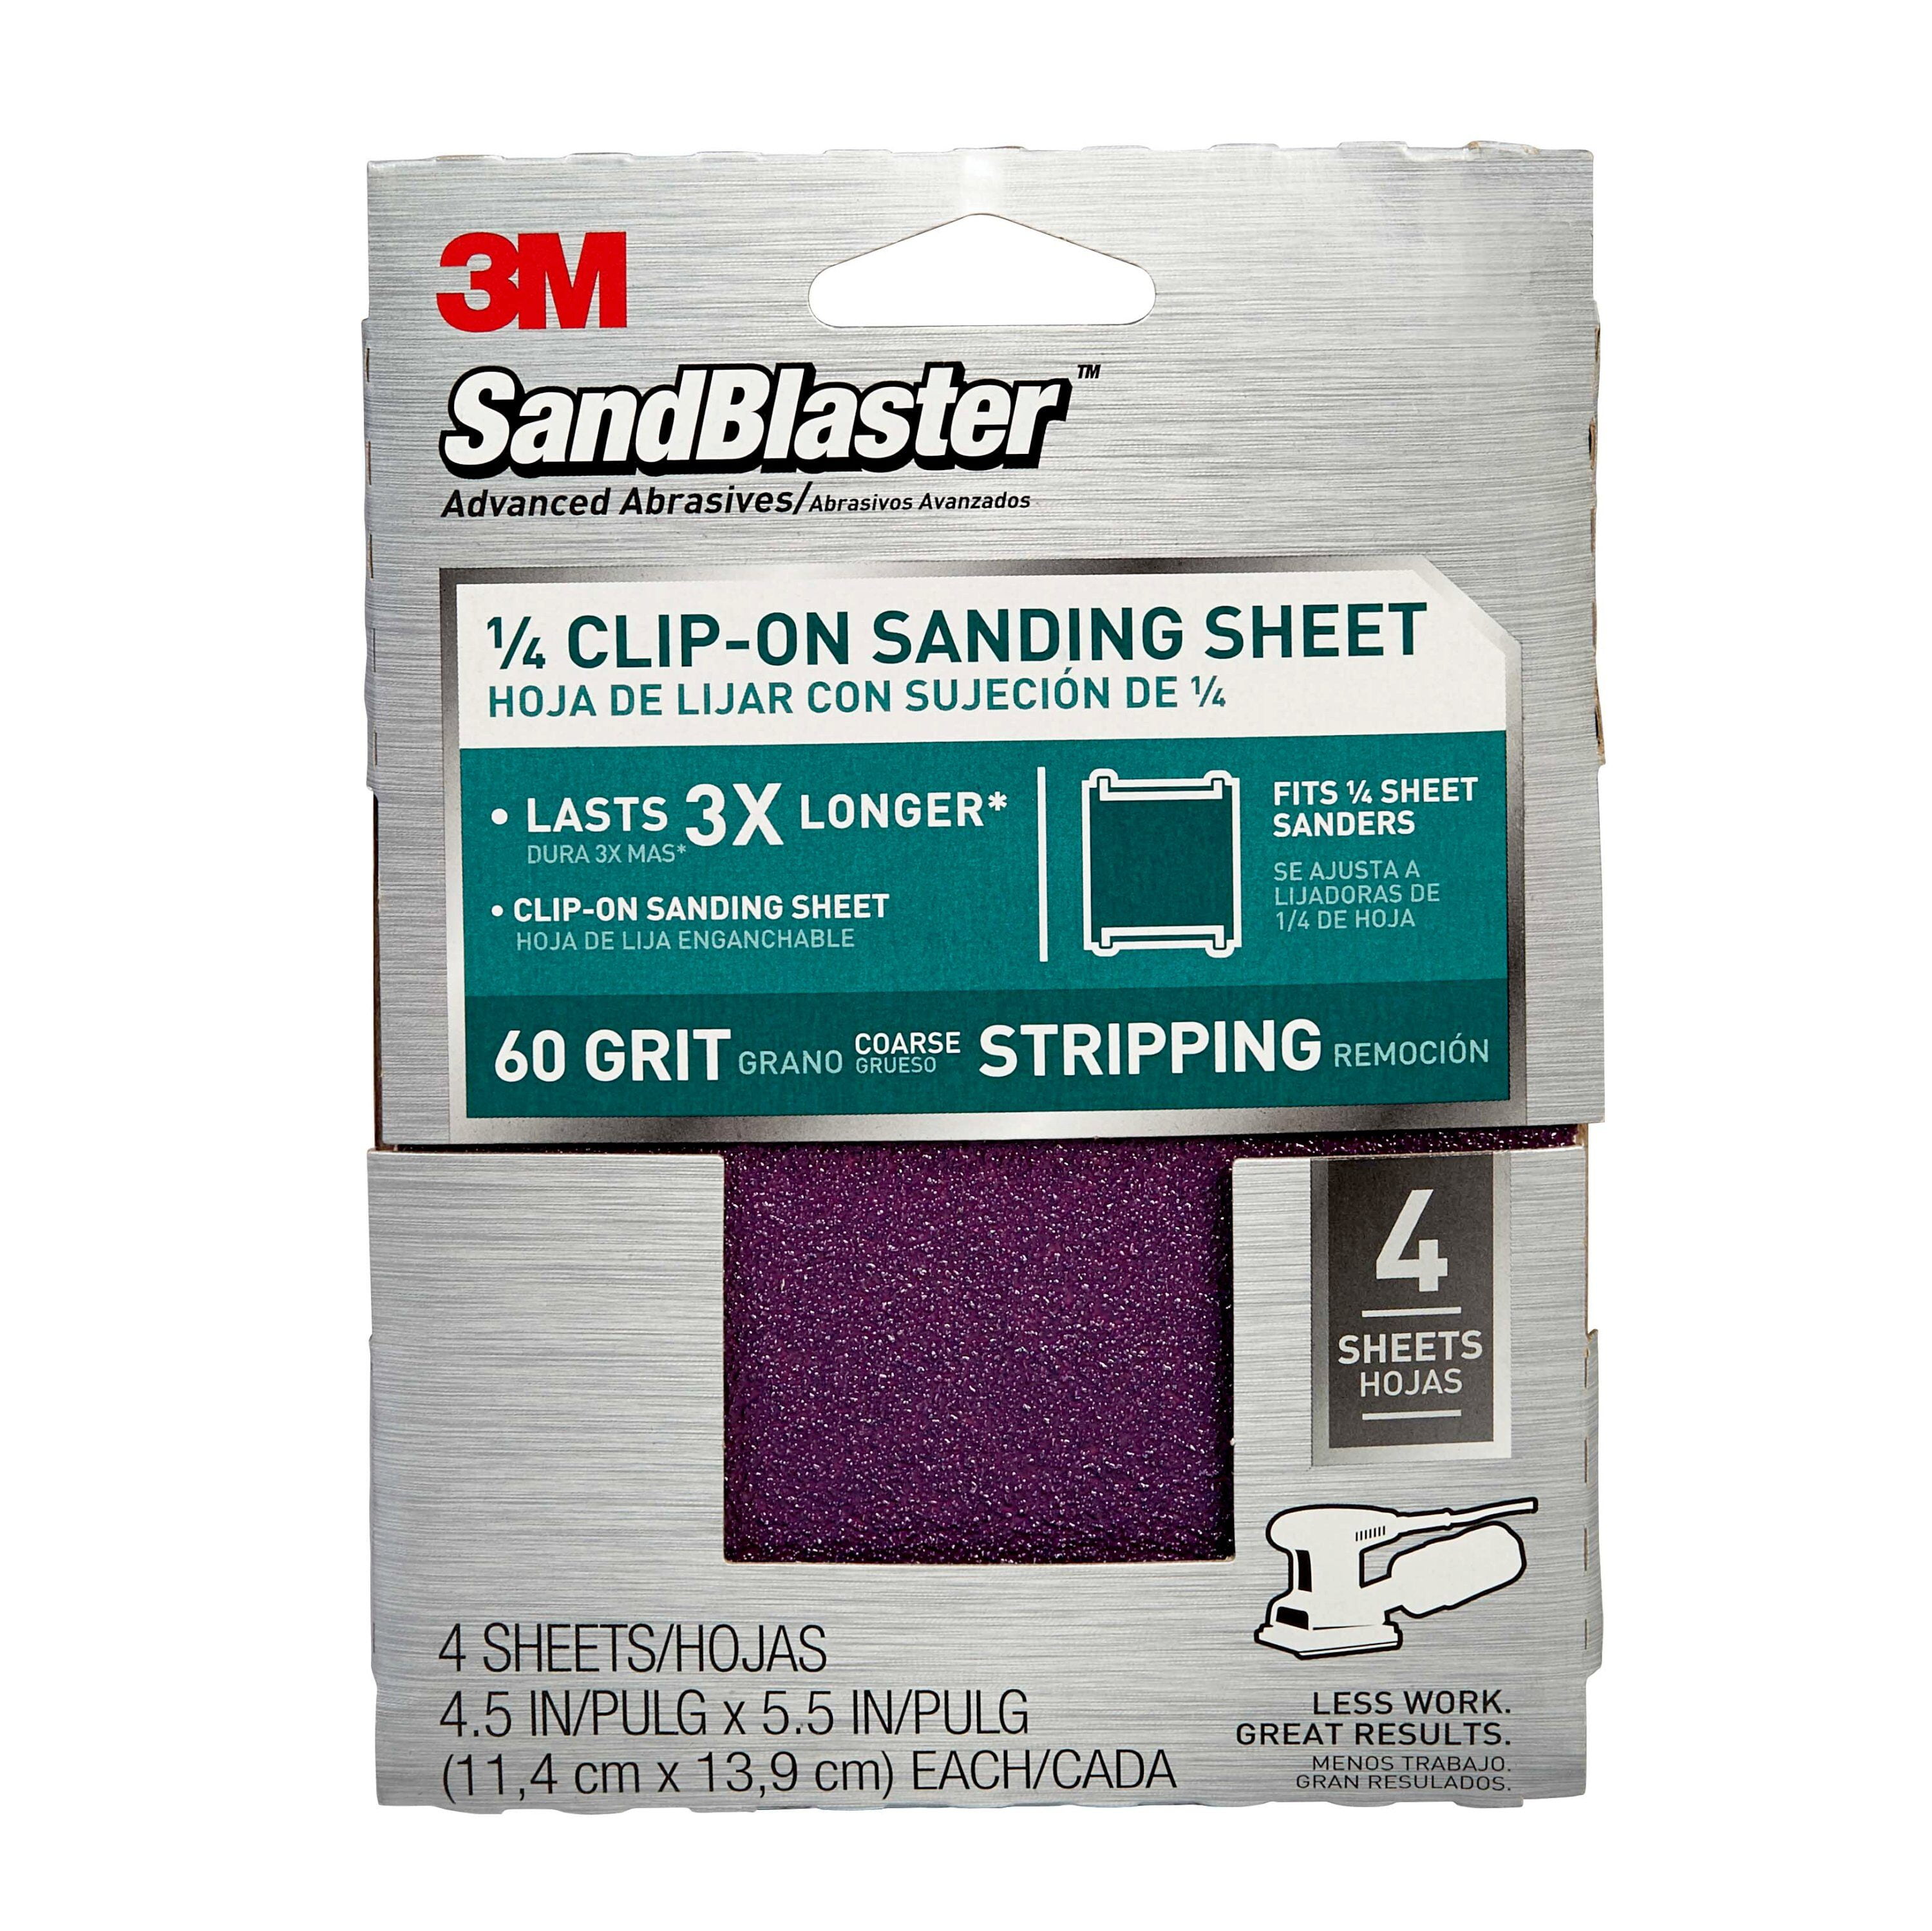 25-Pack 4.5" x 5.5" Gator 5132 1/4 Sheet Clamp-On Sandpaper 100-Grit